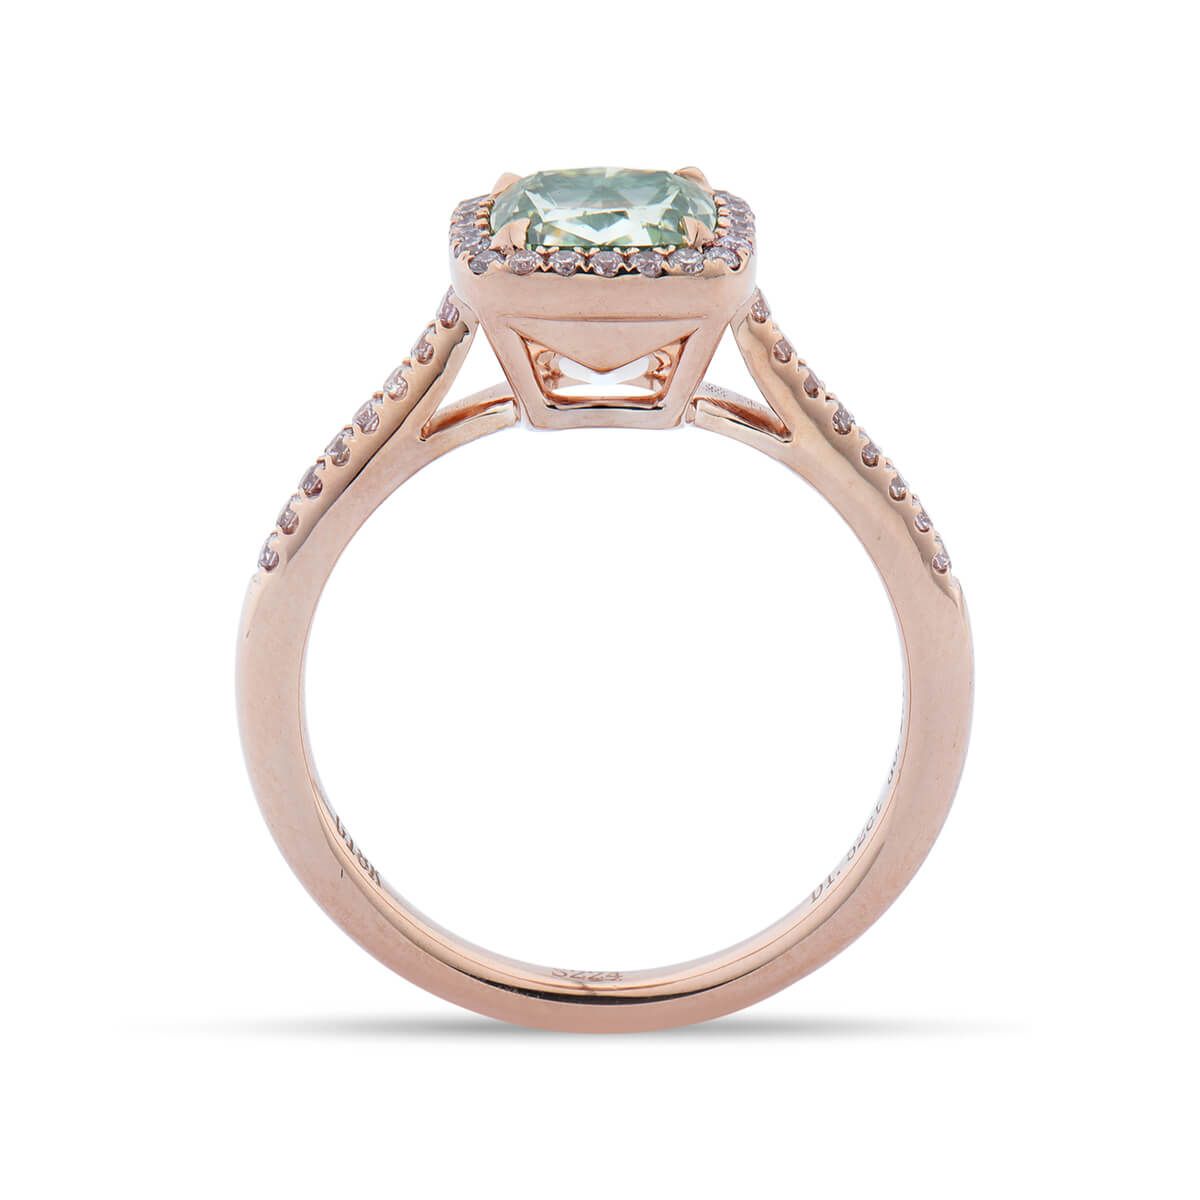 Fancy Brownish Greenish Yellow Diamond Ring, 1.82 Ct. TW, Cushion shape, GIA Certified, 2191336878